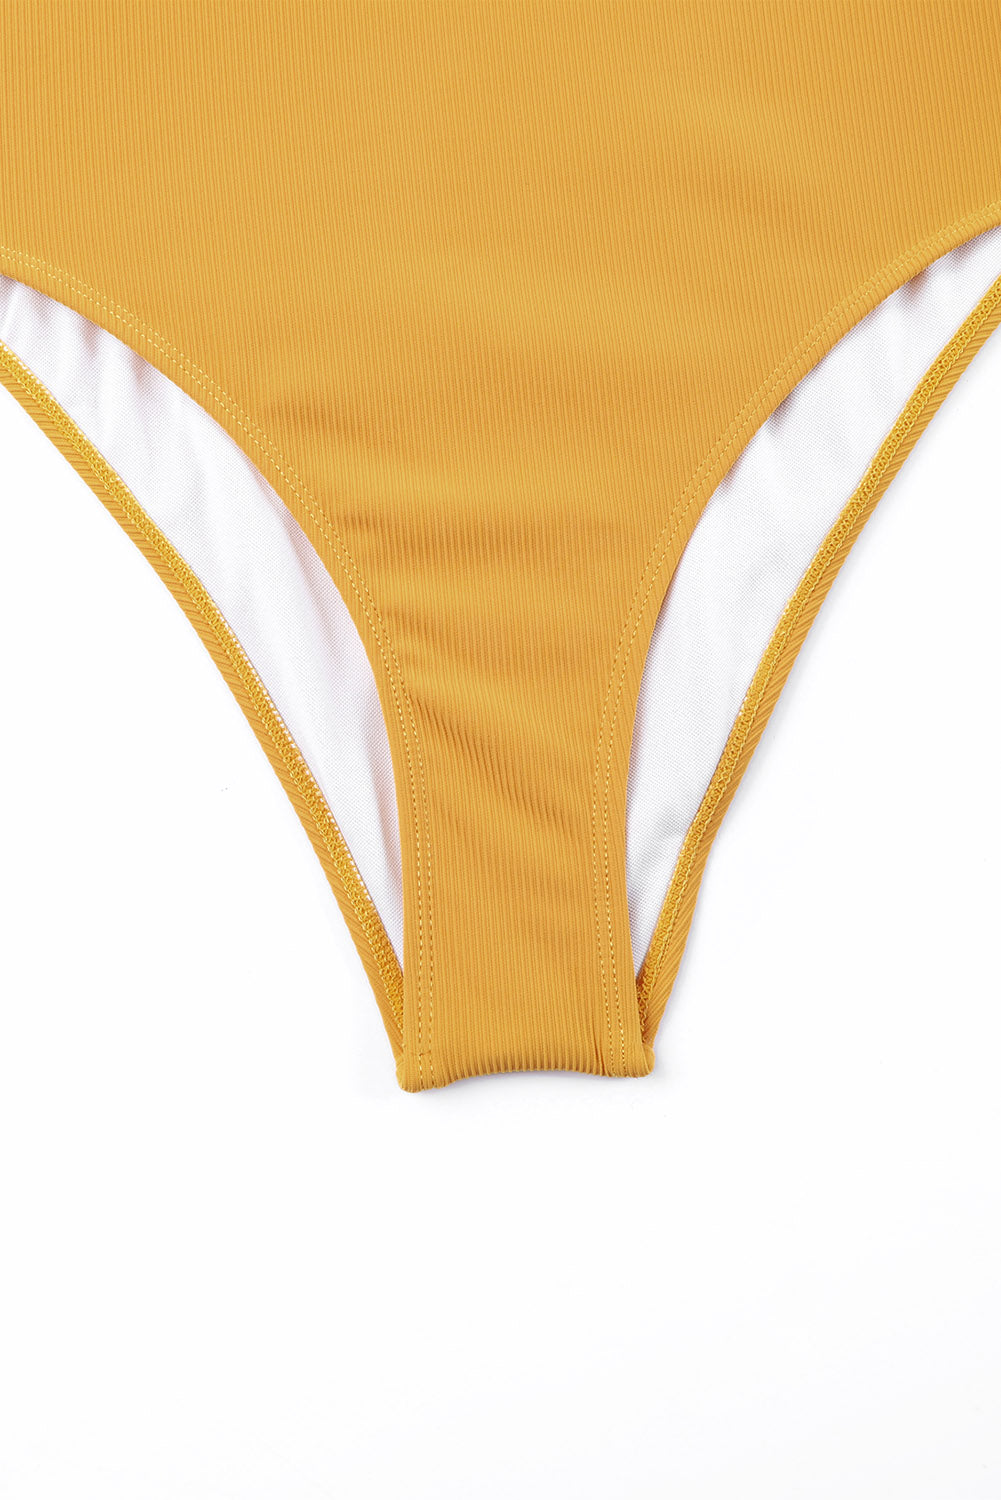 LC443450-7-S, LC443450-7-M, LC443450-7-L, LC443450-7-XL, LC443450-7-2XL, Yellow Women One Piece Swimsuit Tassel Tie Straps Ribbed Bathing Suit